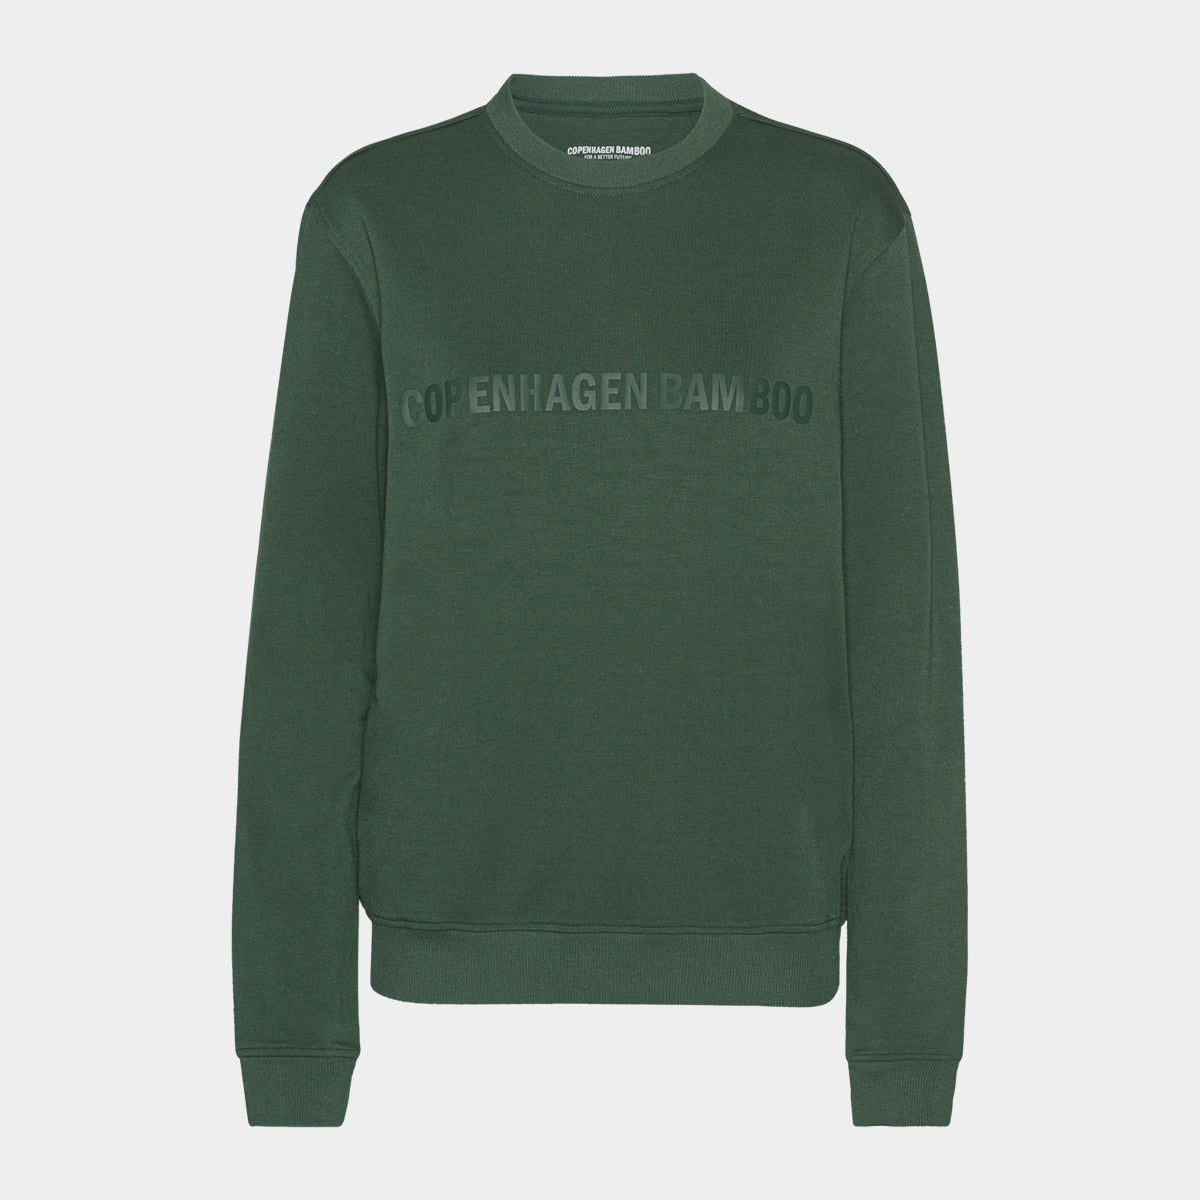 Se Grøn bambus sweatshirt til mænd med logo fra Copenhagen Bamboo, L hos Bambustøj.dk